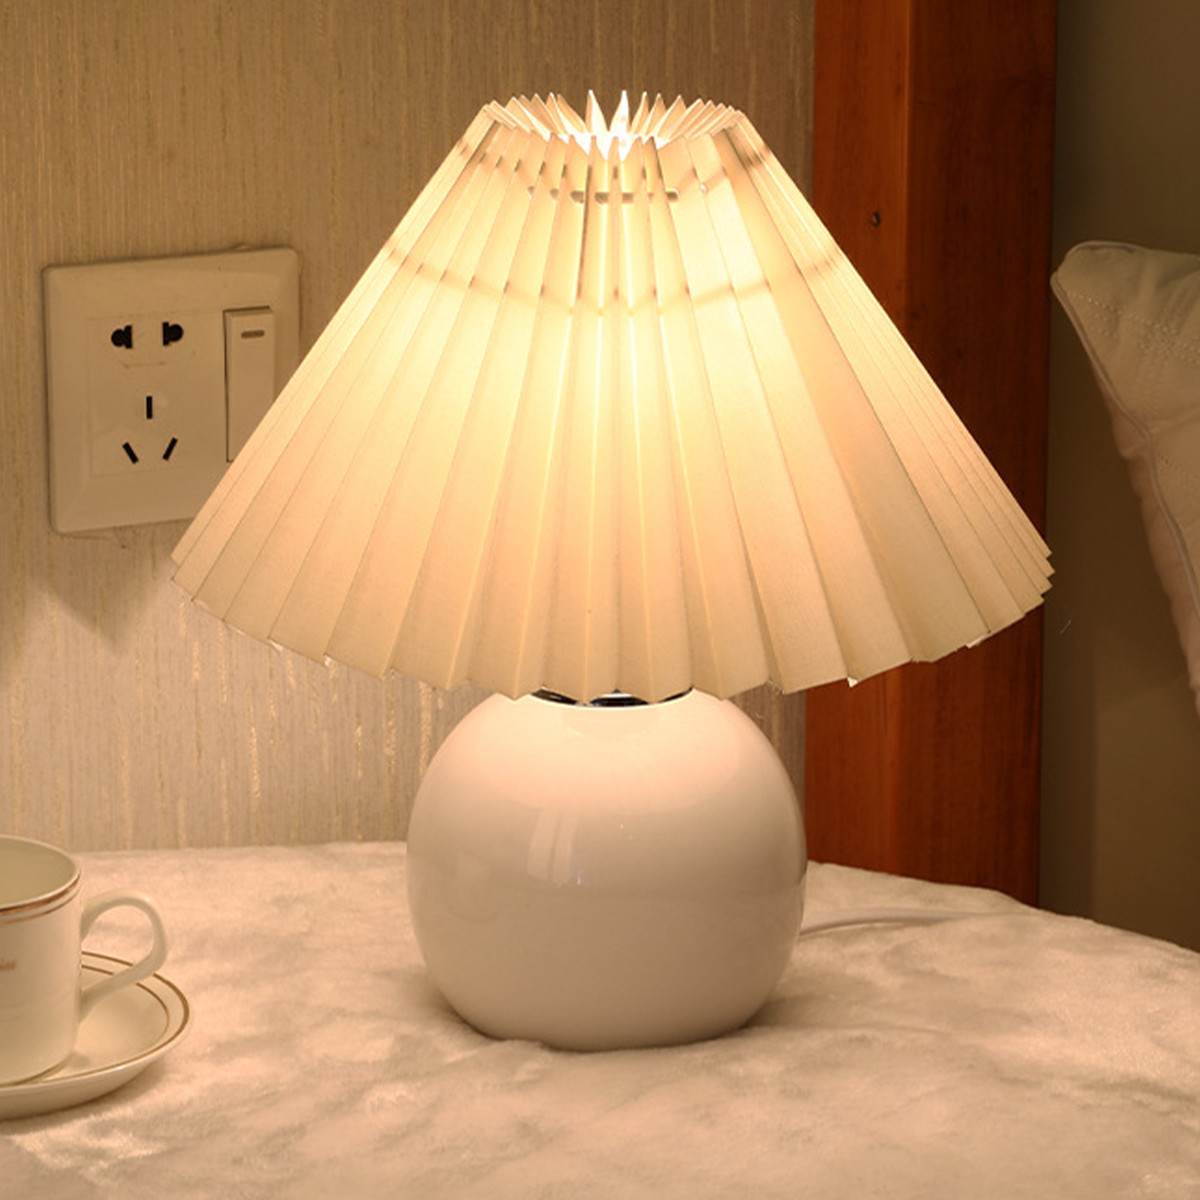 Pleated lights TABLE LAMP LED Desk Lamp For Bedroom